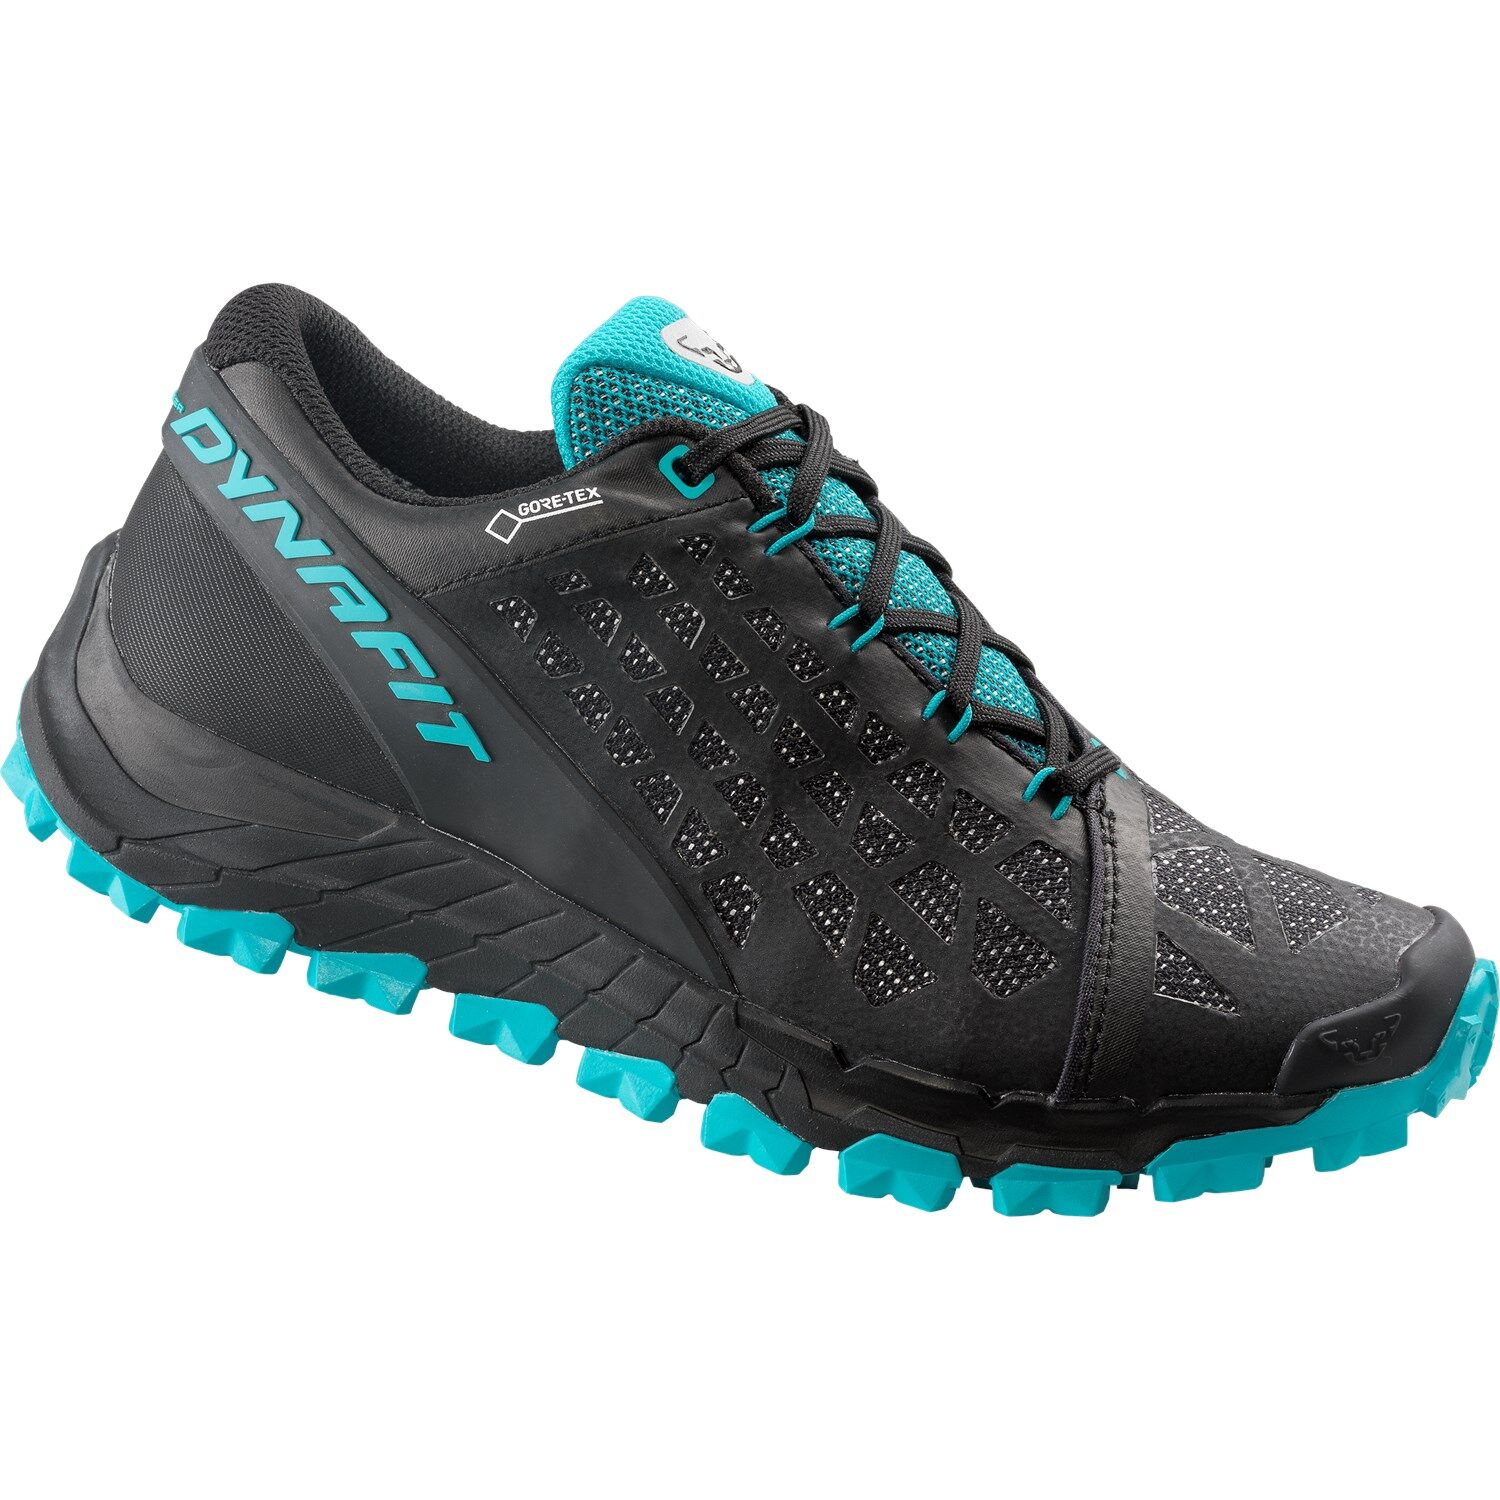 Dynafit Trailbreaker Evo GTX - Trail running shoes - Women's